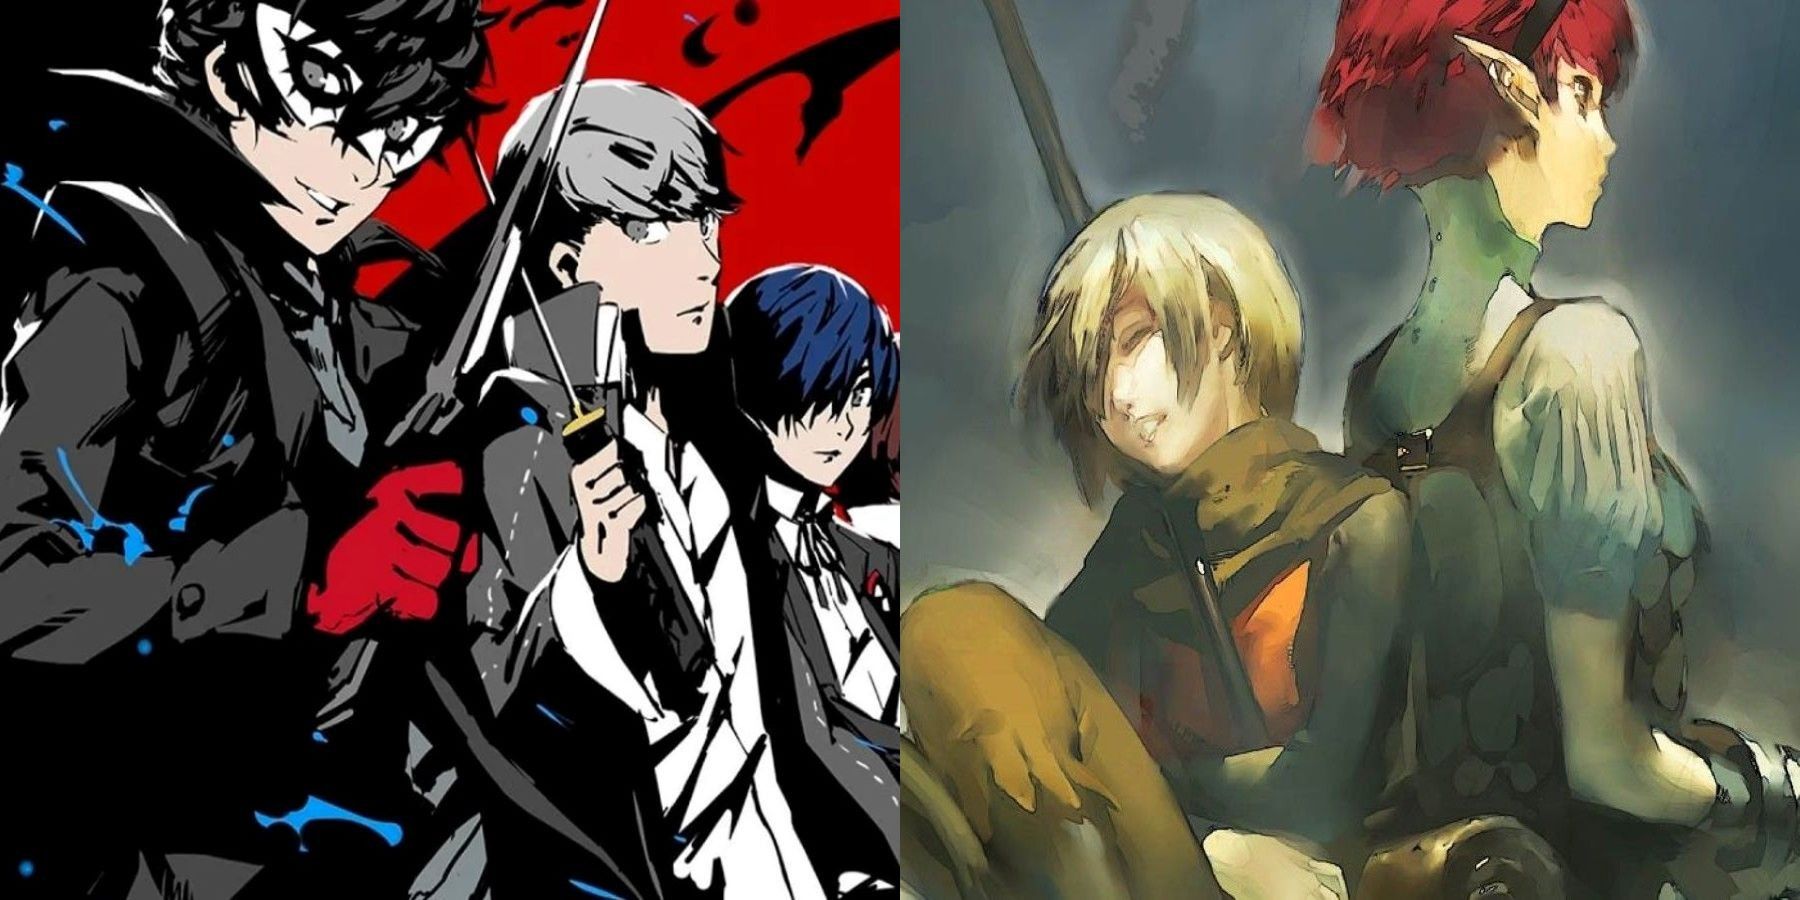 Главные герои Persona 3, Persona 4 и Persona 5 рядом с концепт-артом Project Re Fantasy